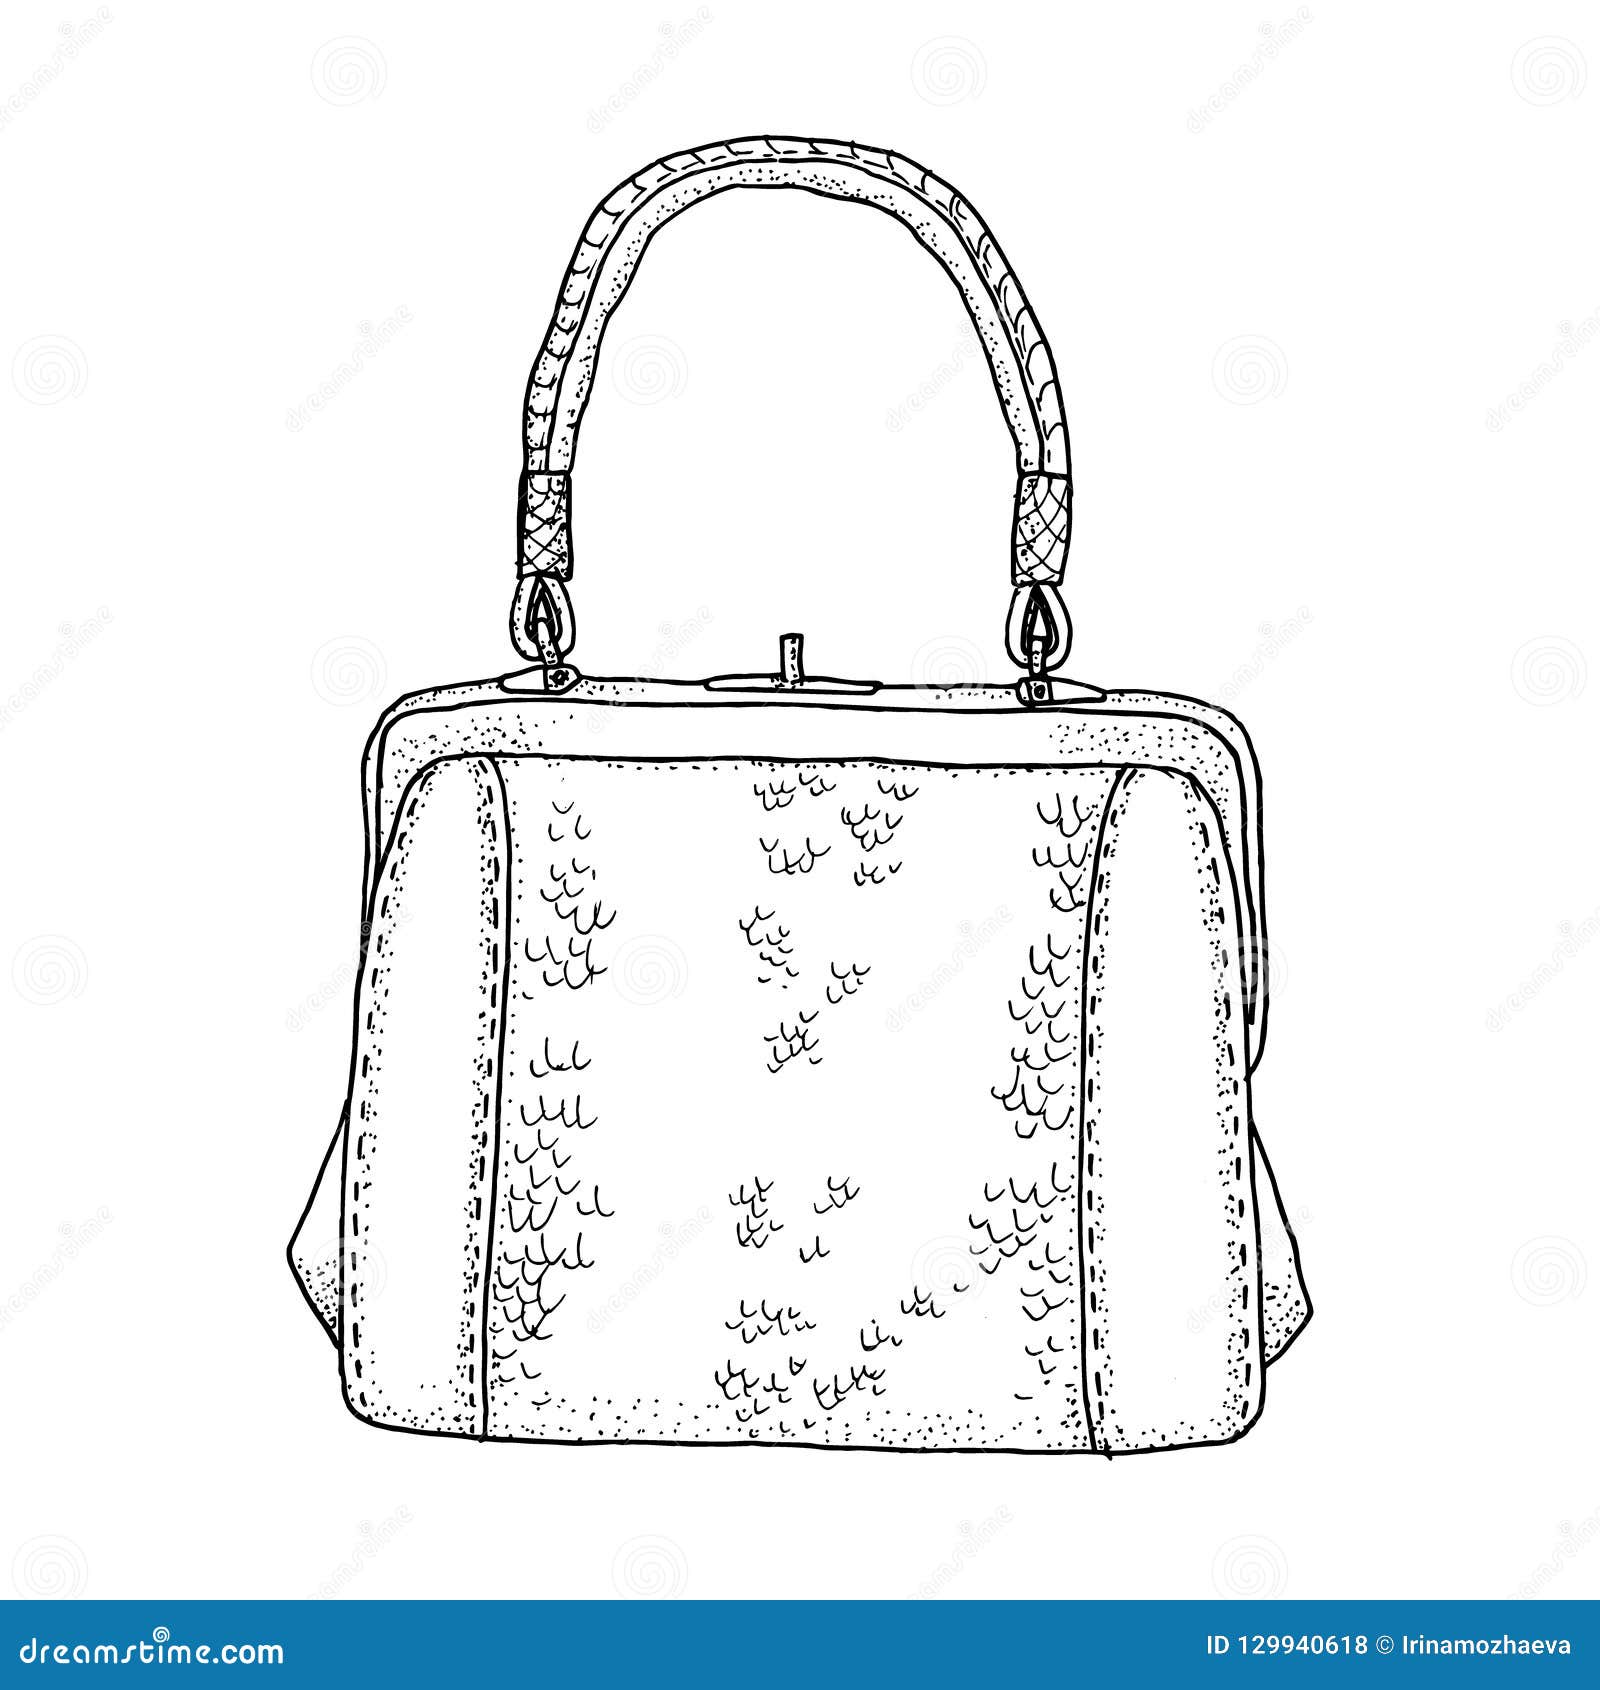 Discover 87+ hand bag sketch - in.duhocakina